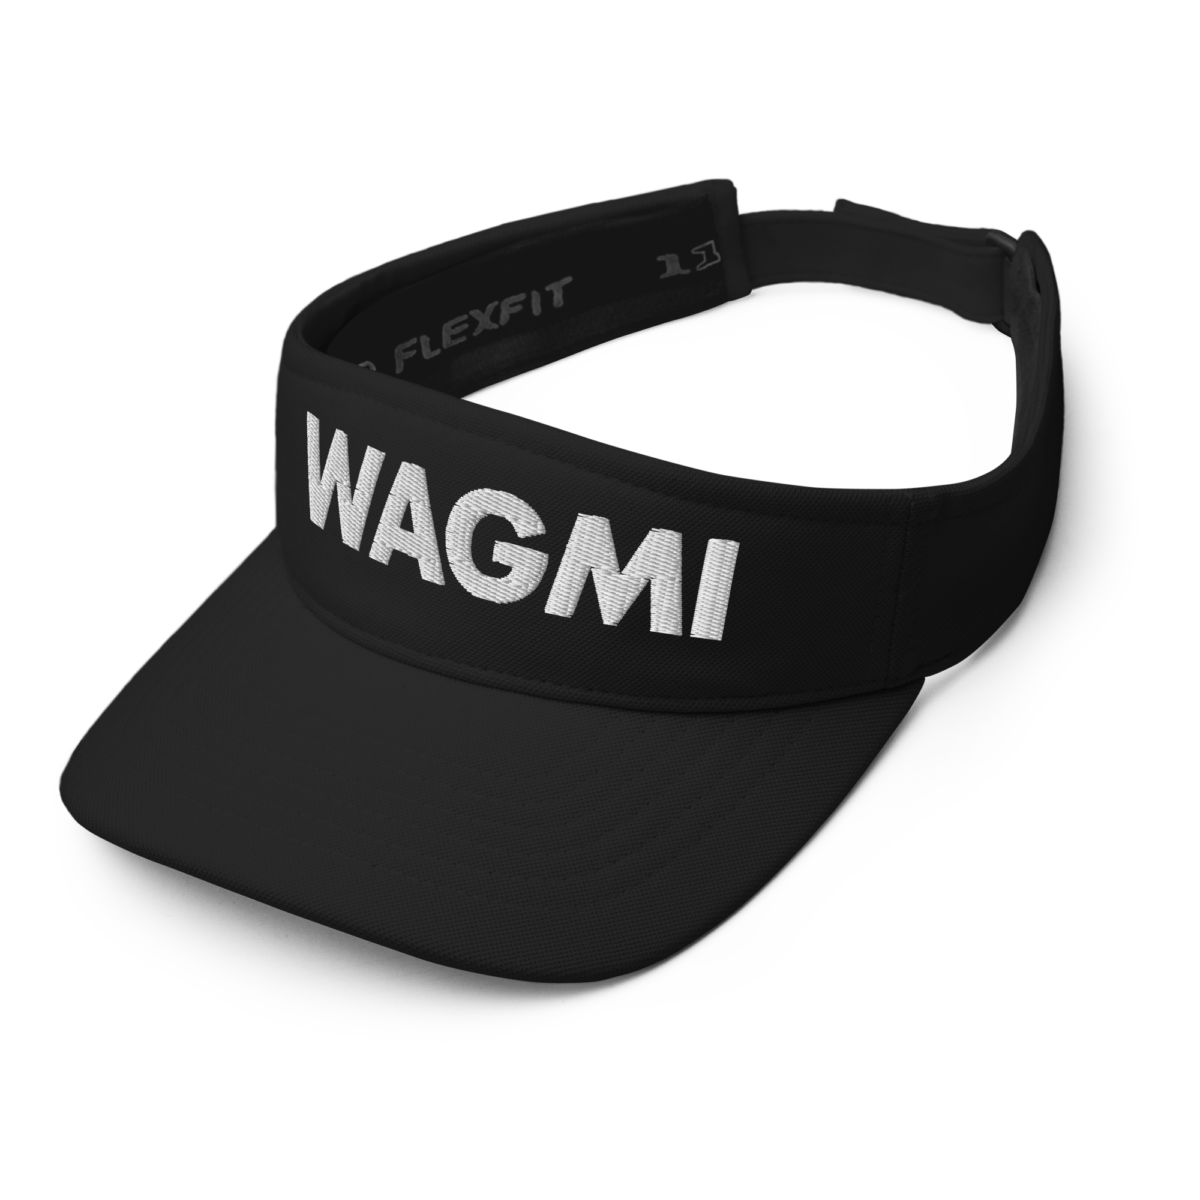 visor black left front 62e199e49936d - WAGMI Visor